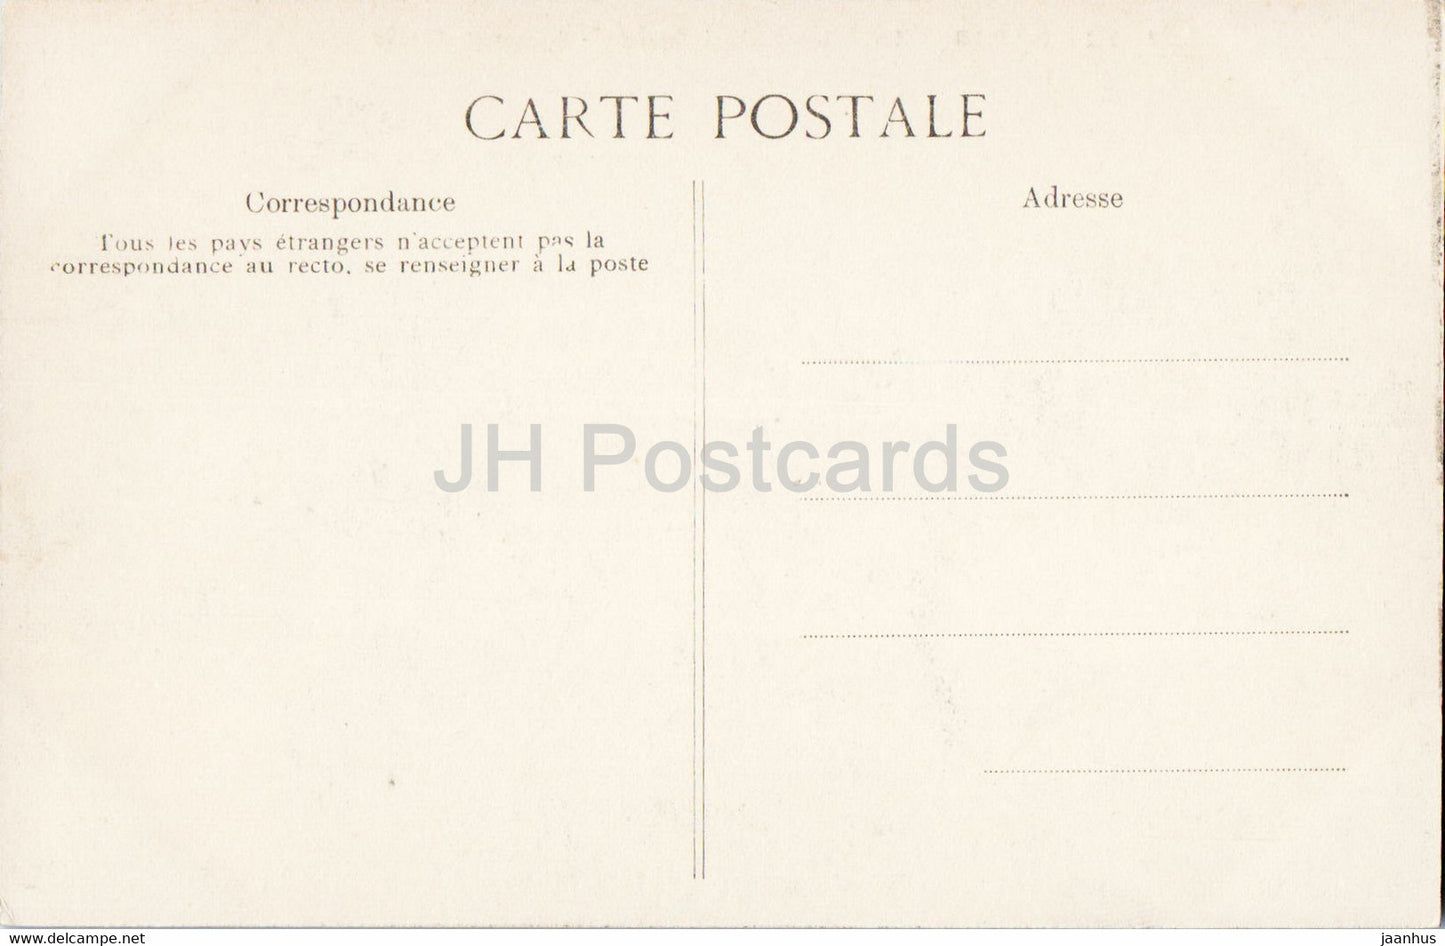 Paris - Interieur de l'Opéra - Grande Salle - opéra - 4272 - carte postale ancienne - France - inutilisée